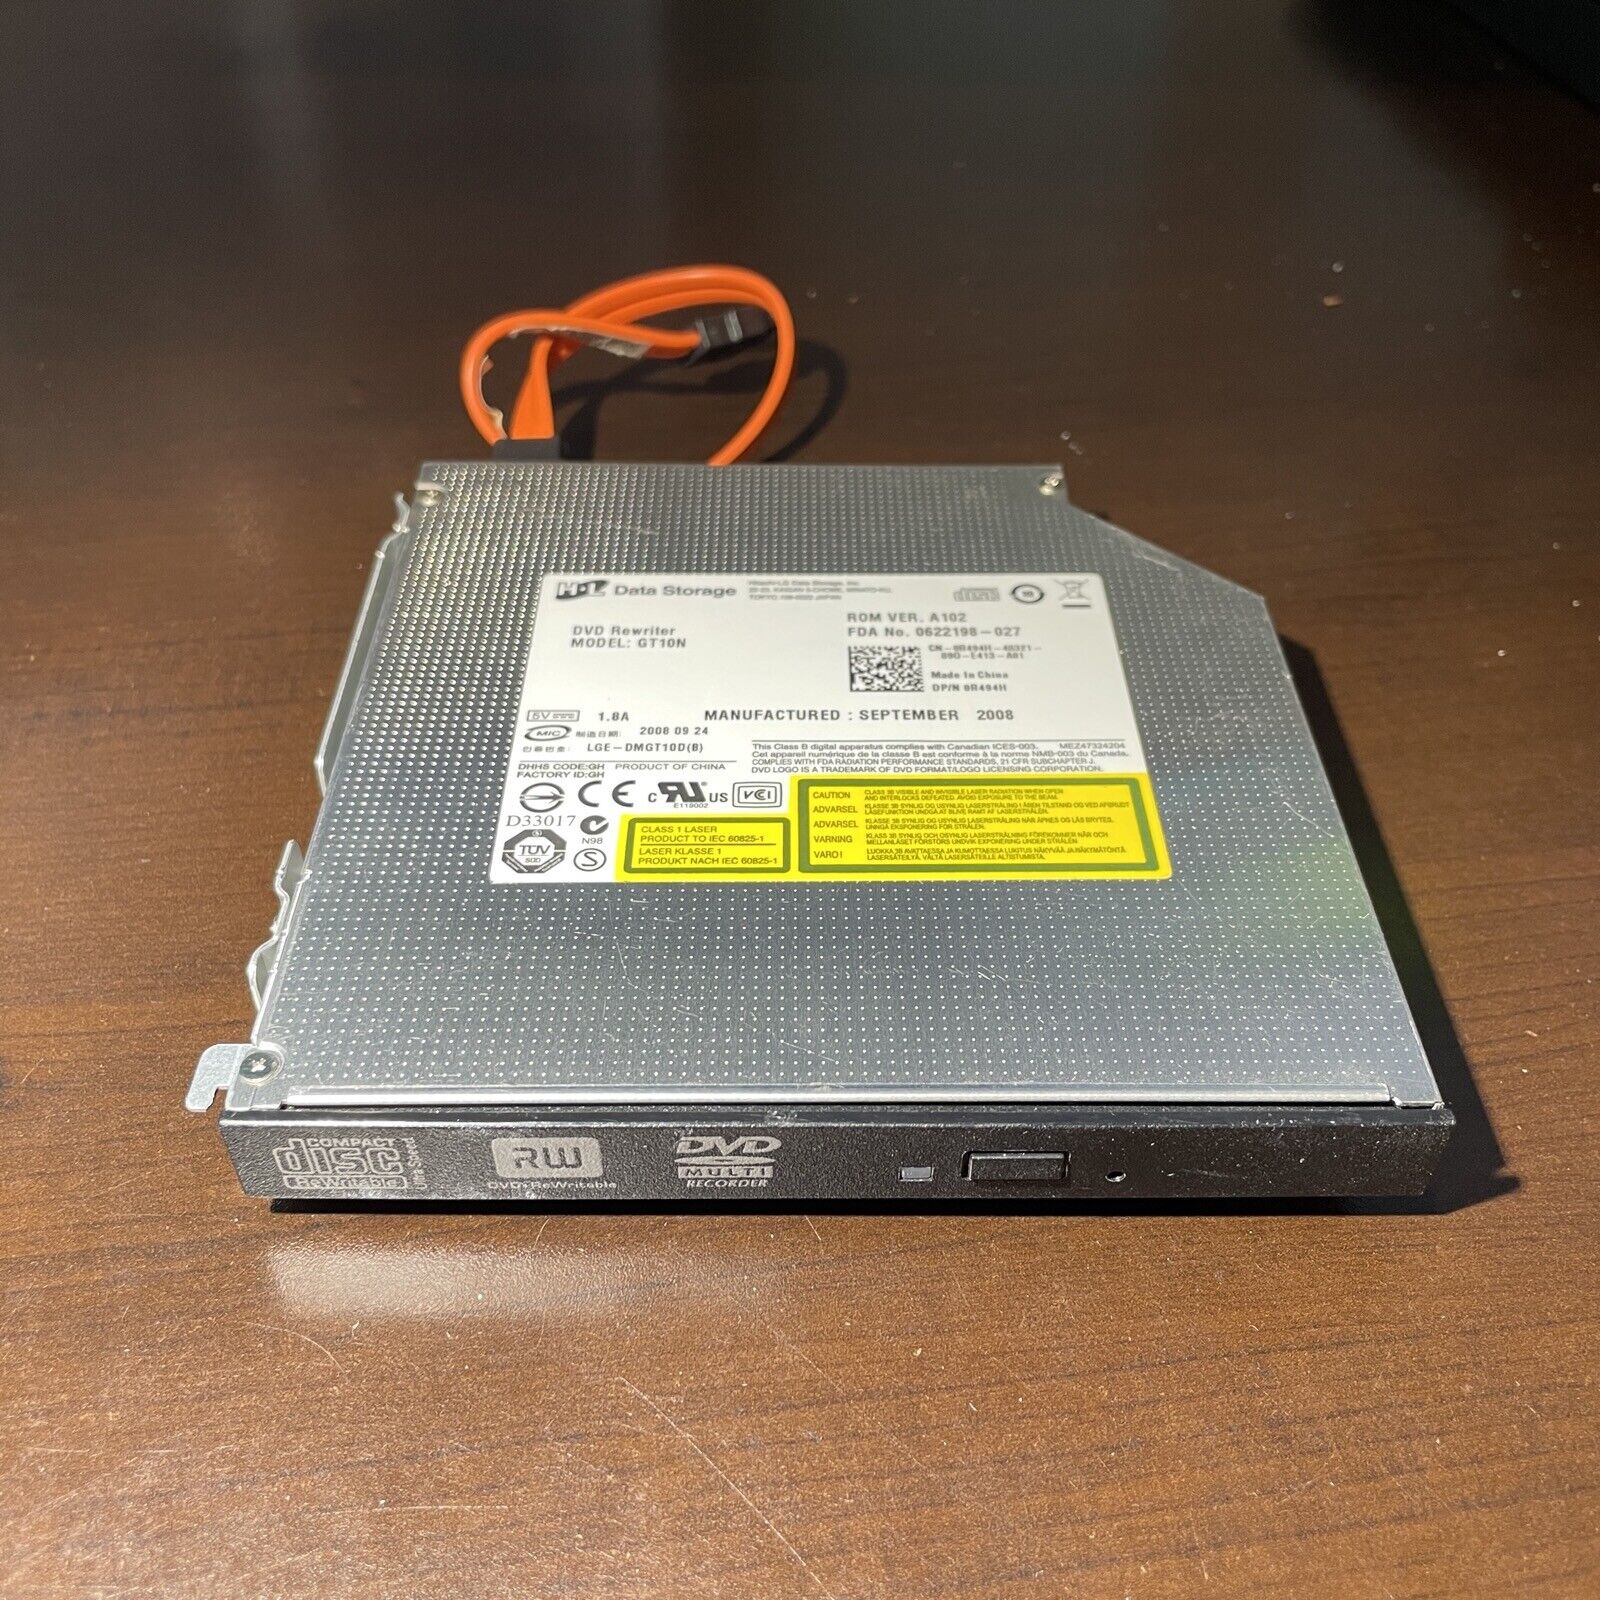 Internal Laptop SATA H-L Data Storage DVD Rewriter GT10N